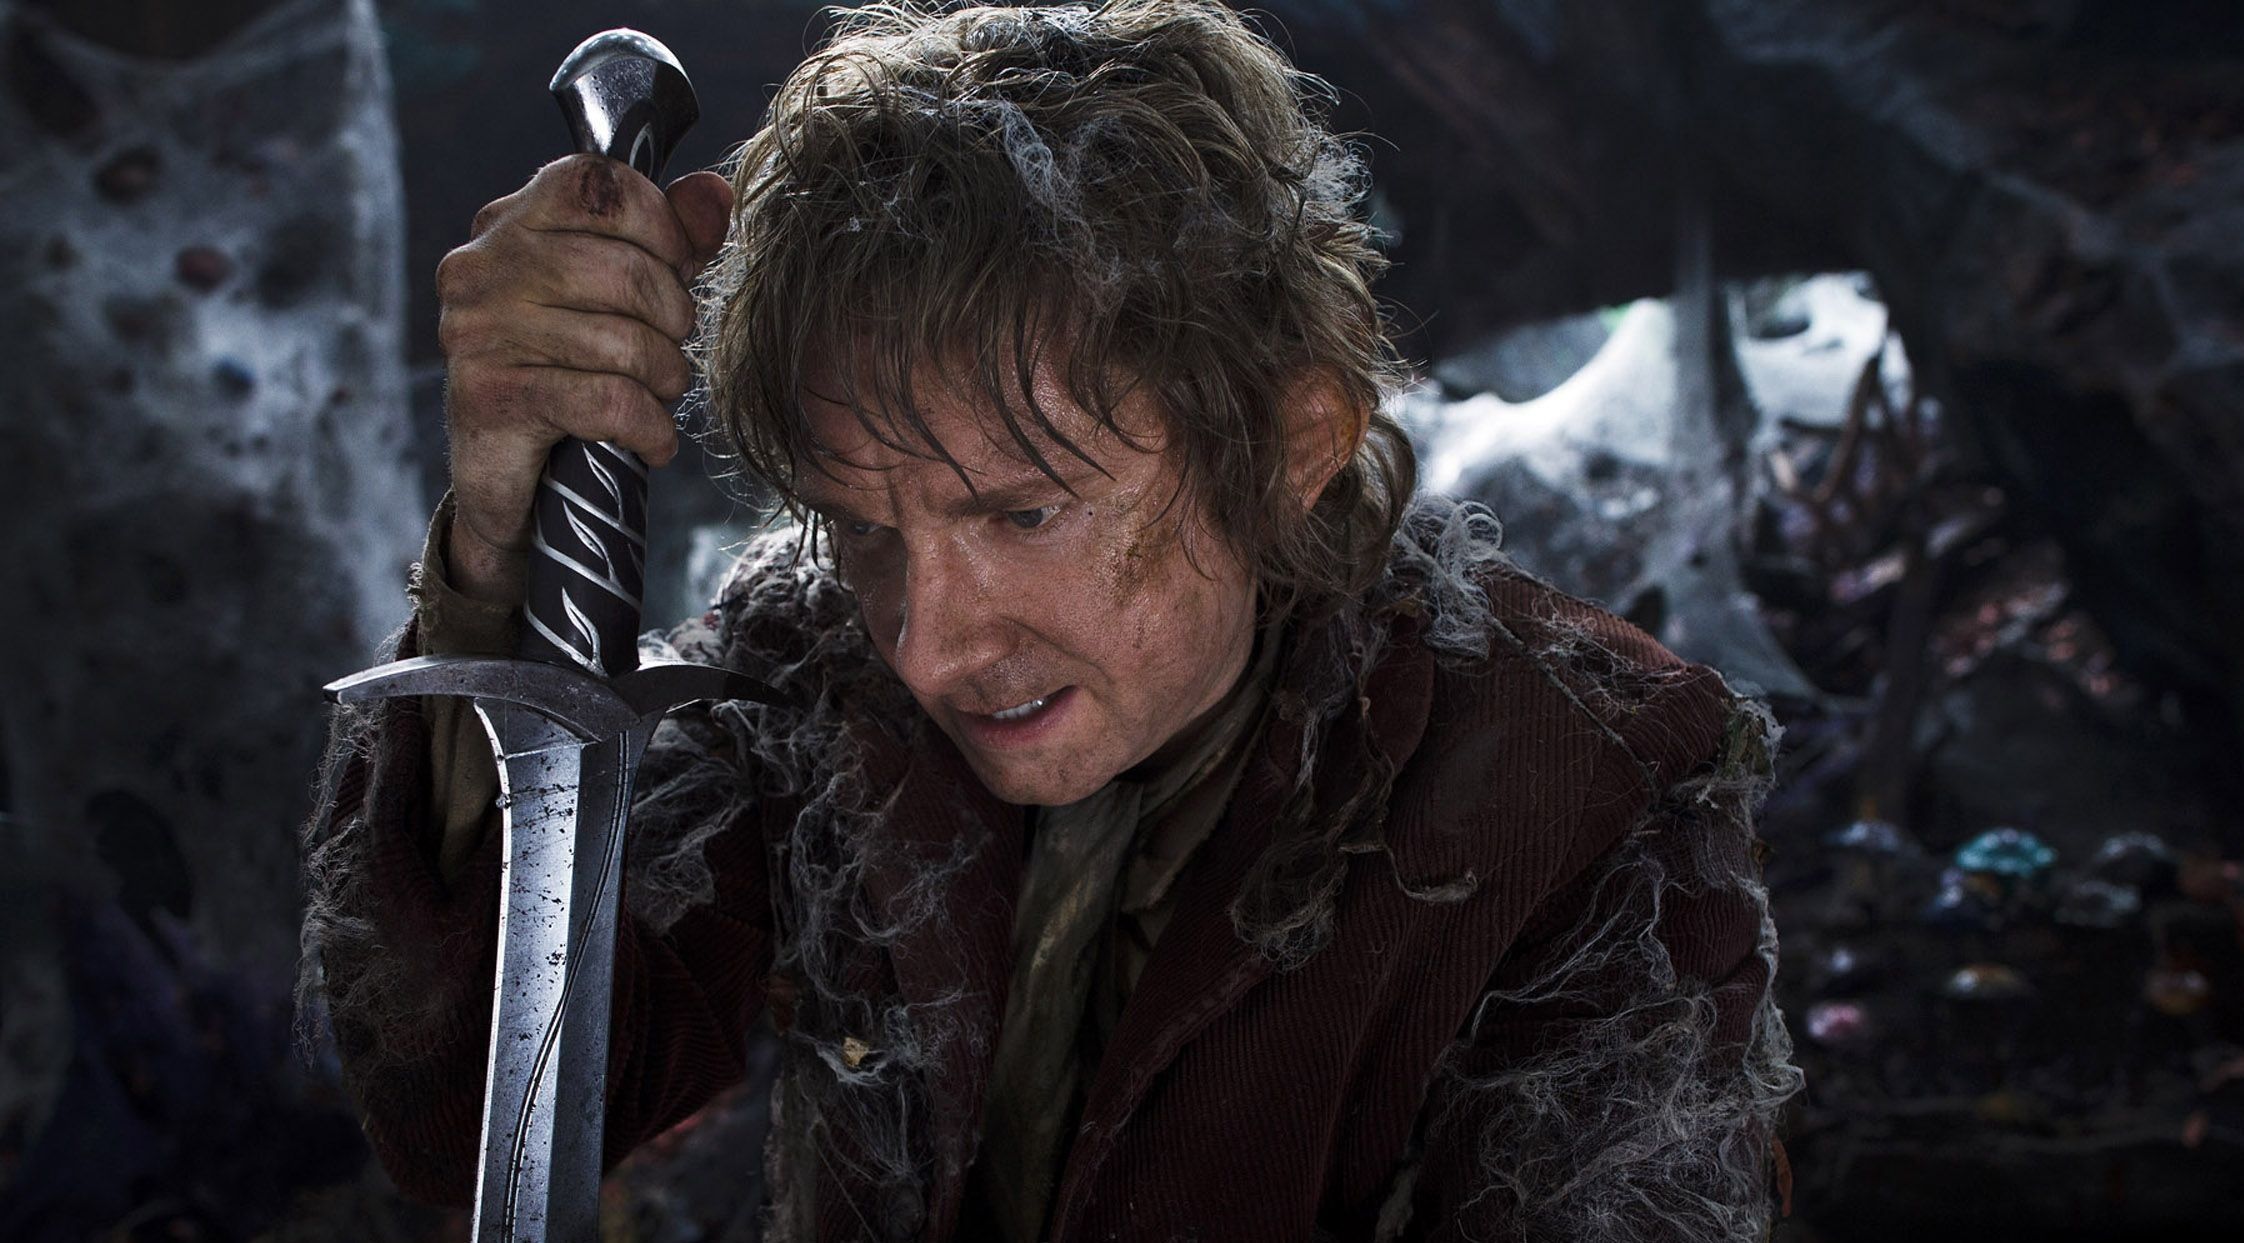 Bilbo Baggins (Martin Freeman) wields Sting in The Hobbit: An Unexpected Journey